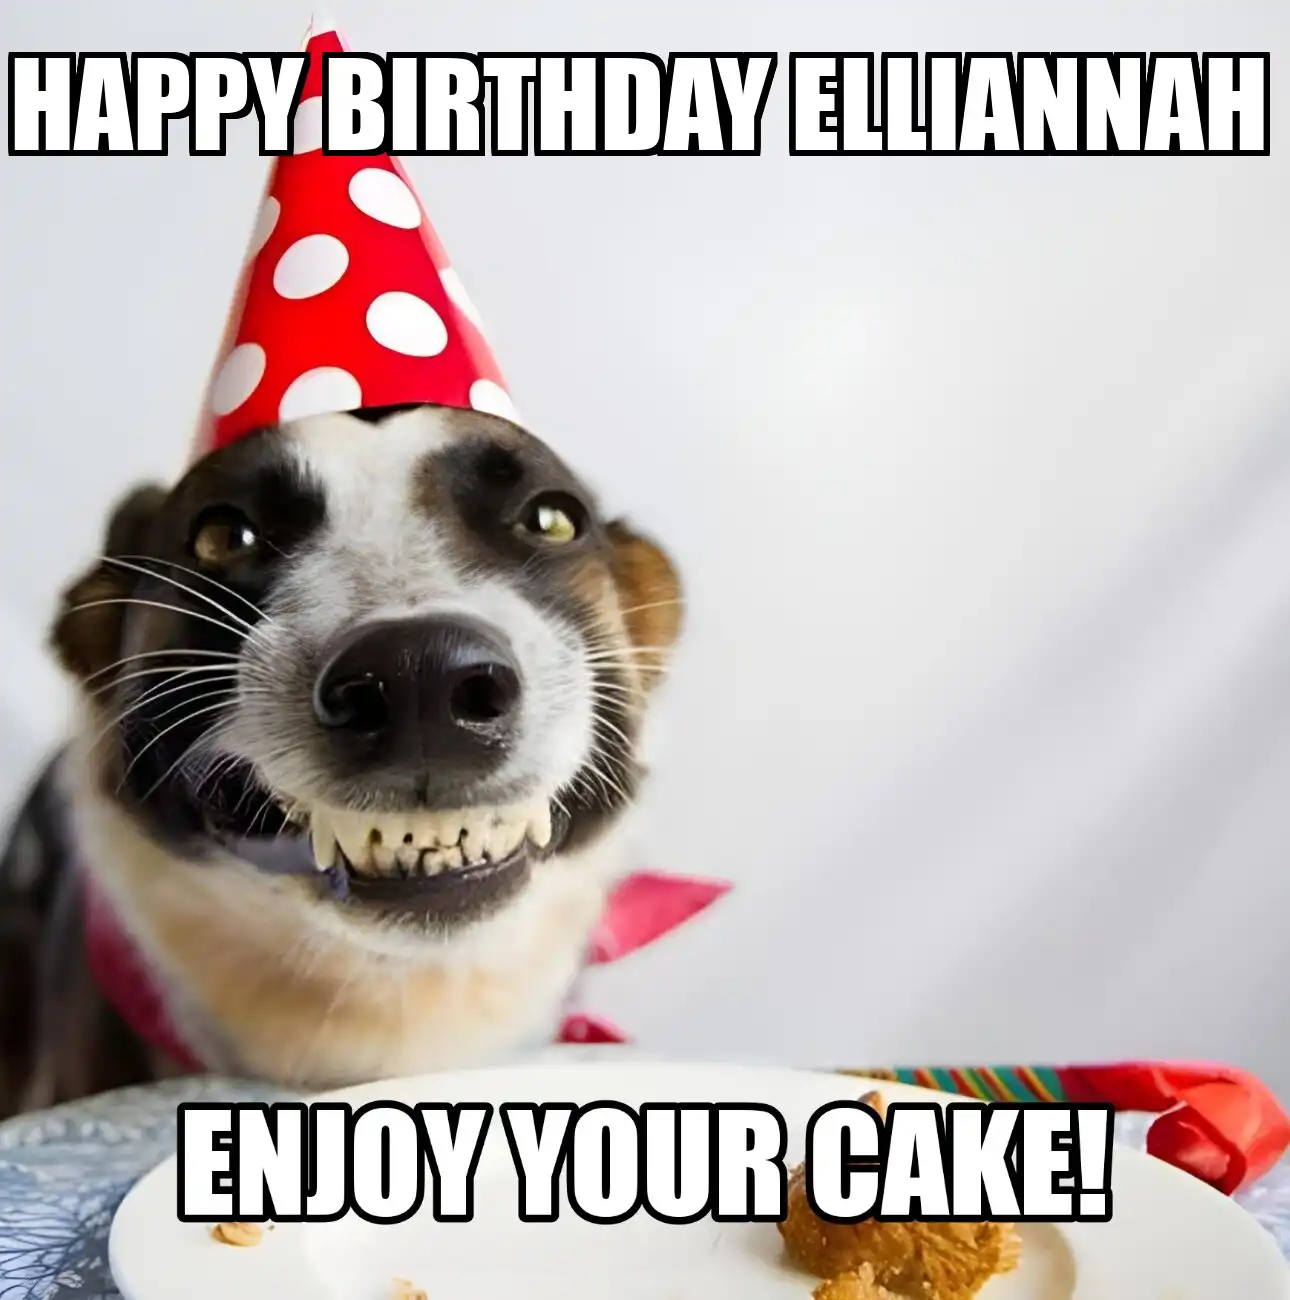 Happy Birthday Elliannah Enjoy Your Cake Dog Meme